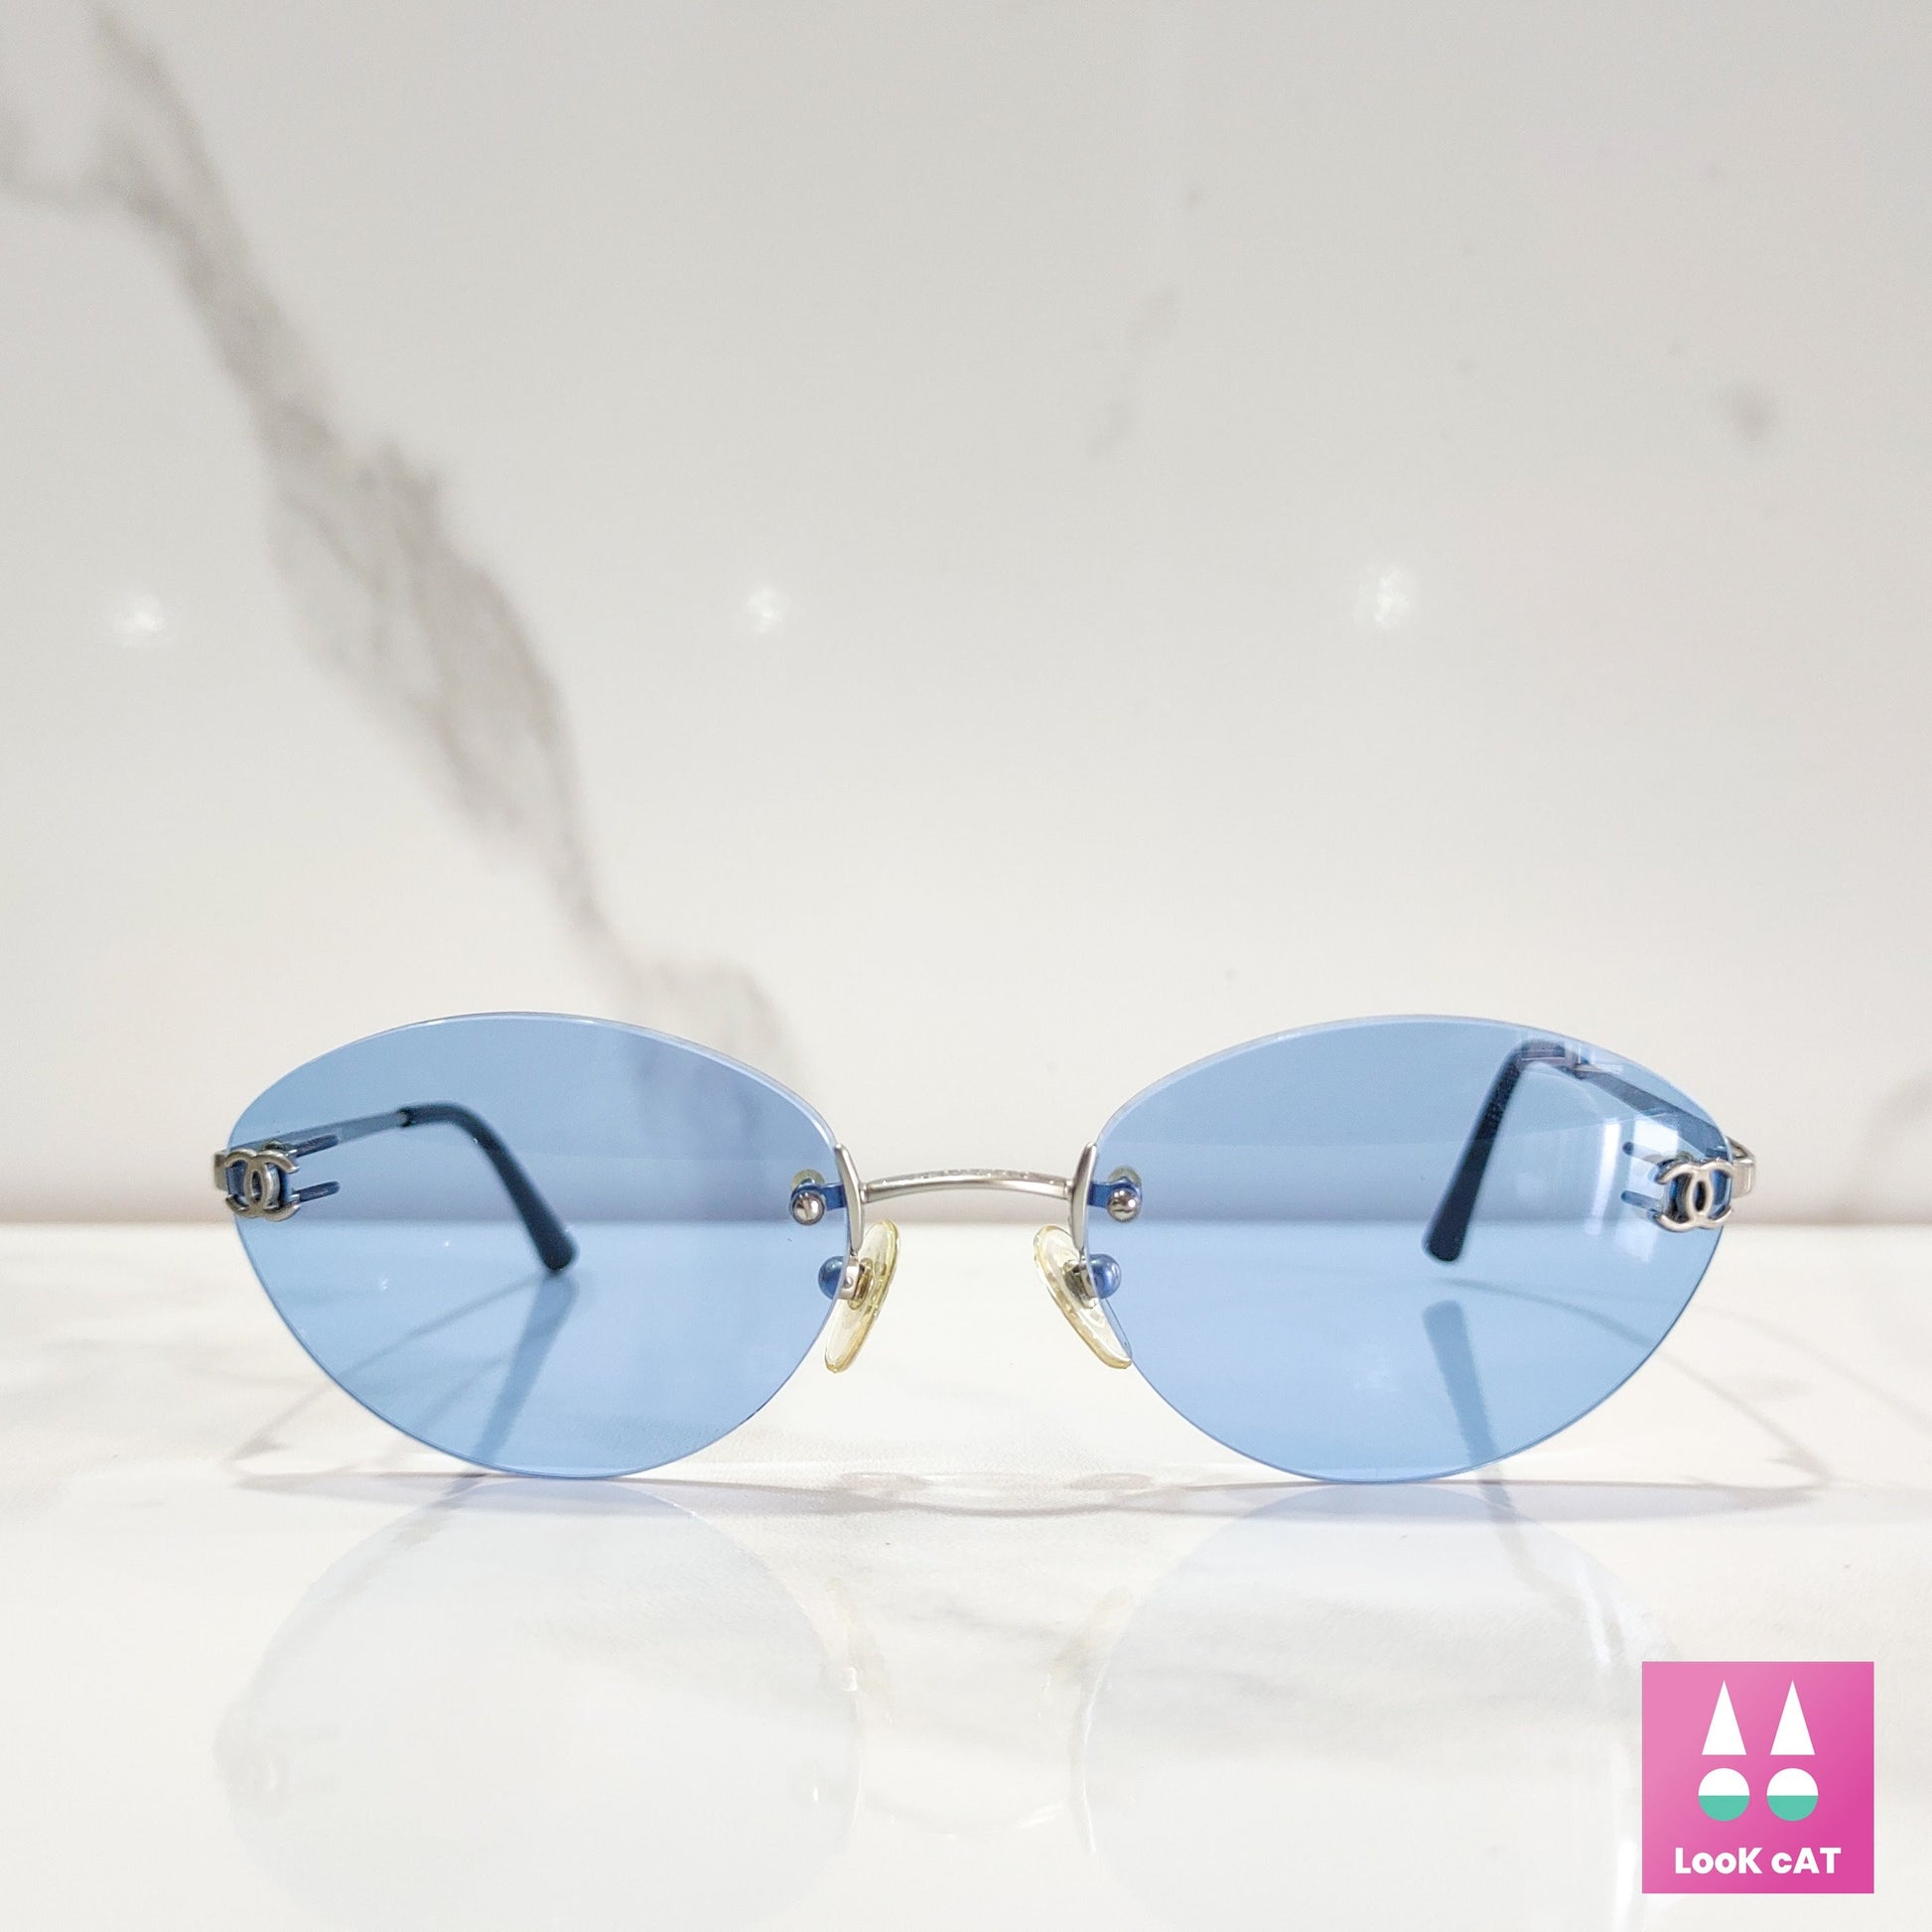 Chanel sunglasses model 2013 lunette brille y2k shades rimless